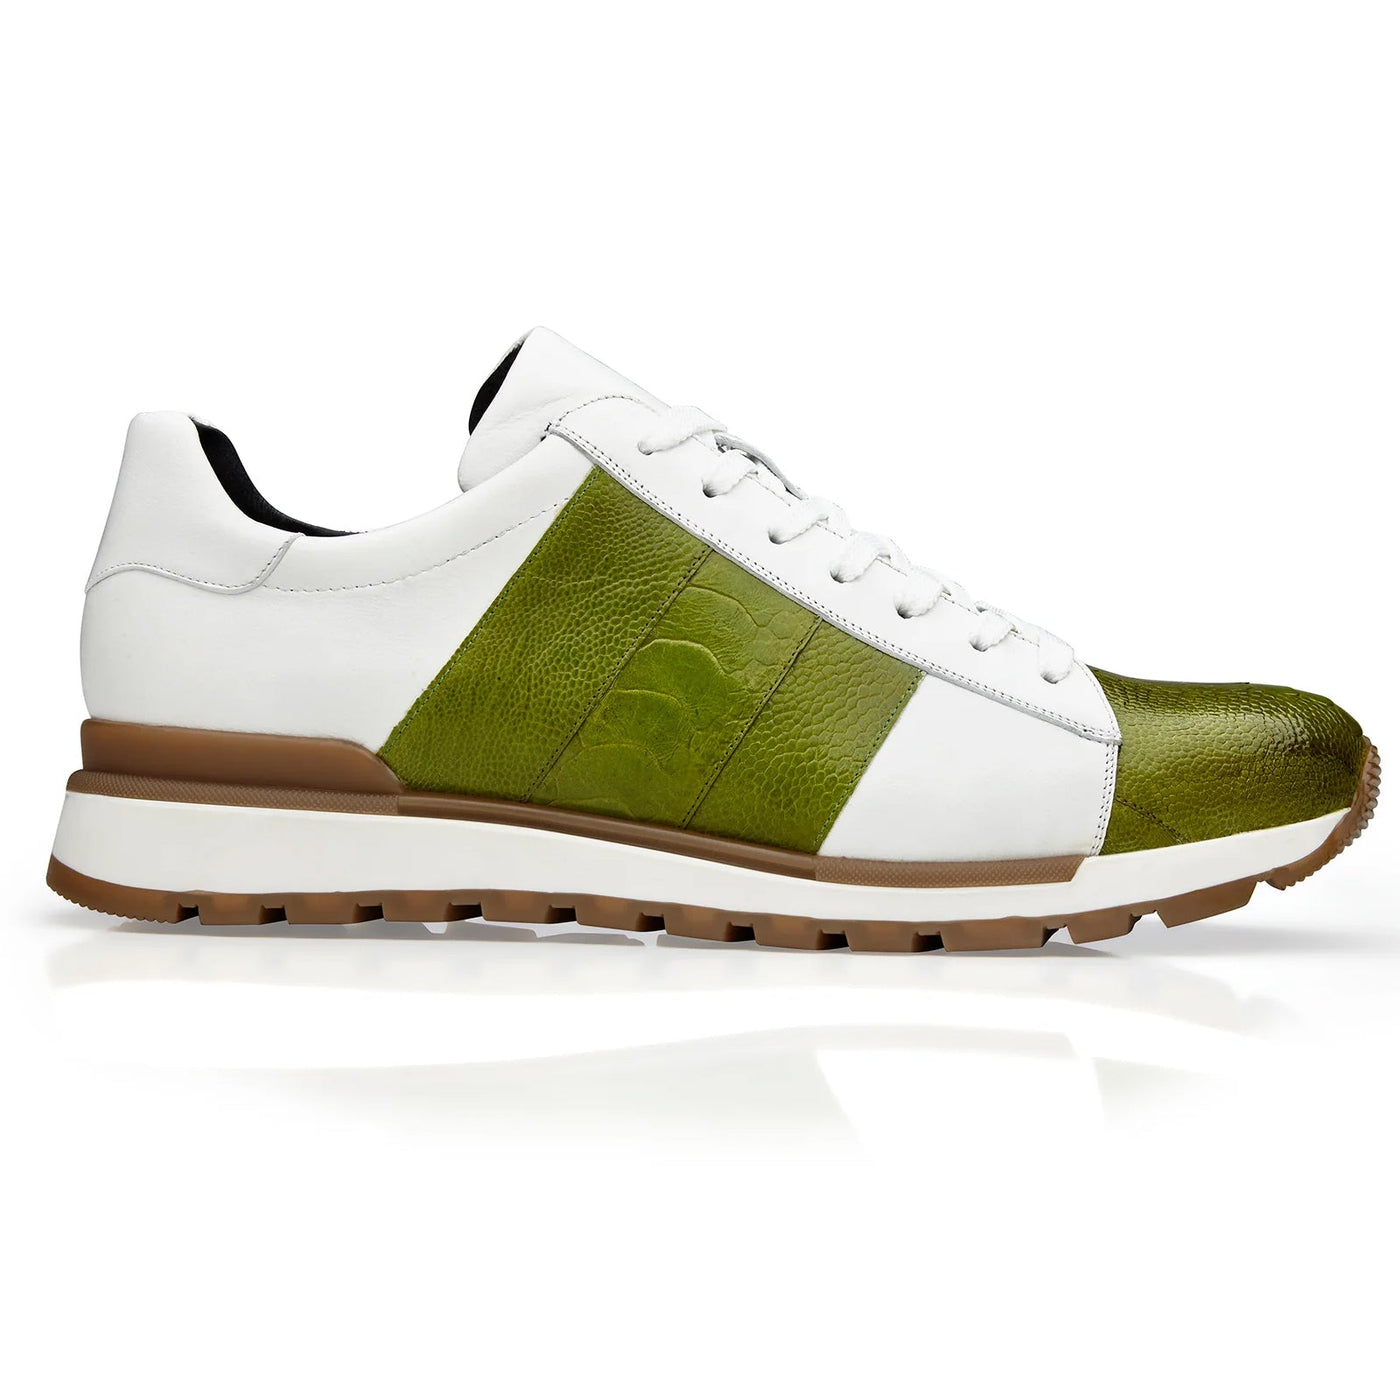 Men's Belvedere Blake Calf & Ostrich Leg Dress Sneaker in Lime Green & White